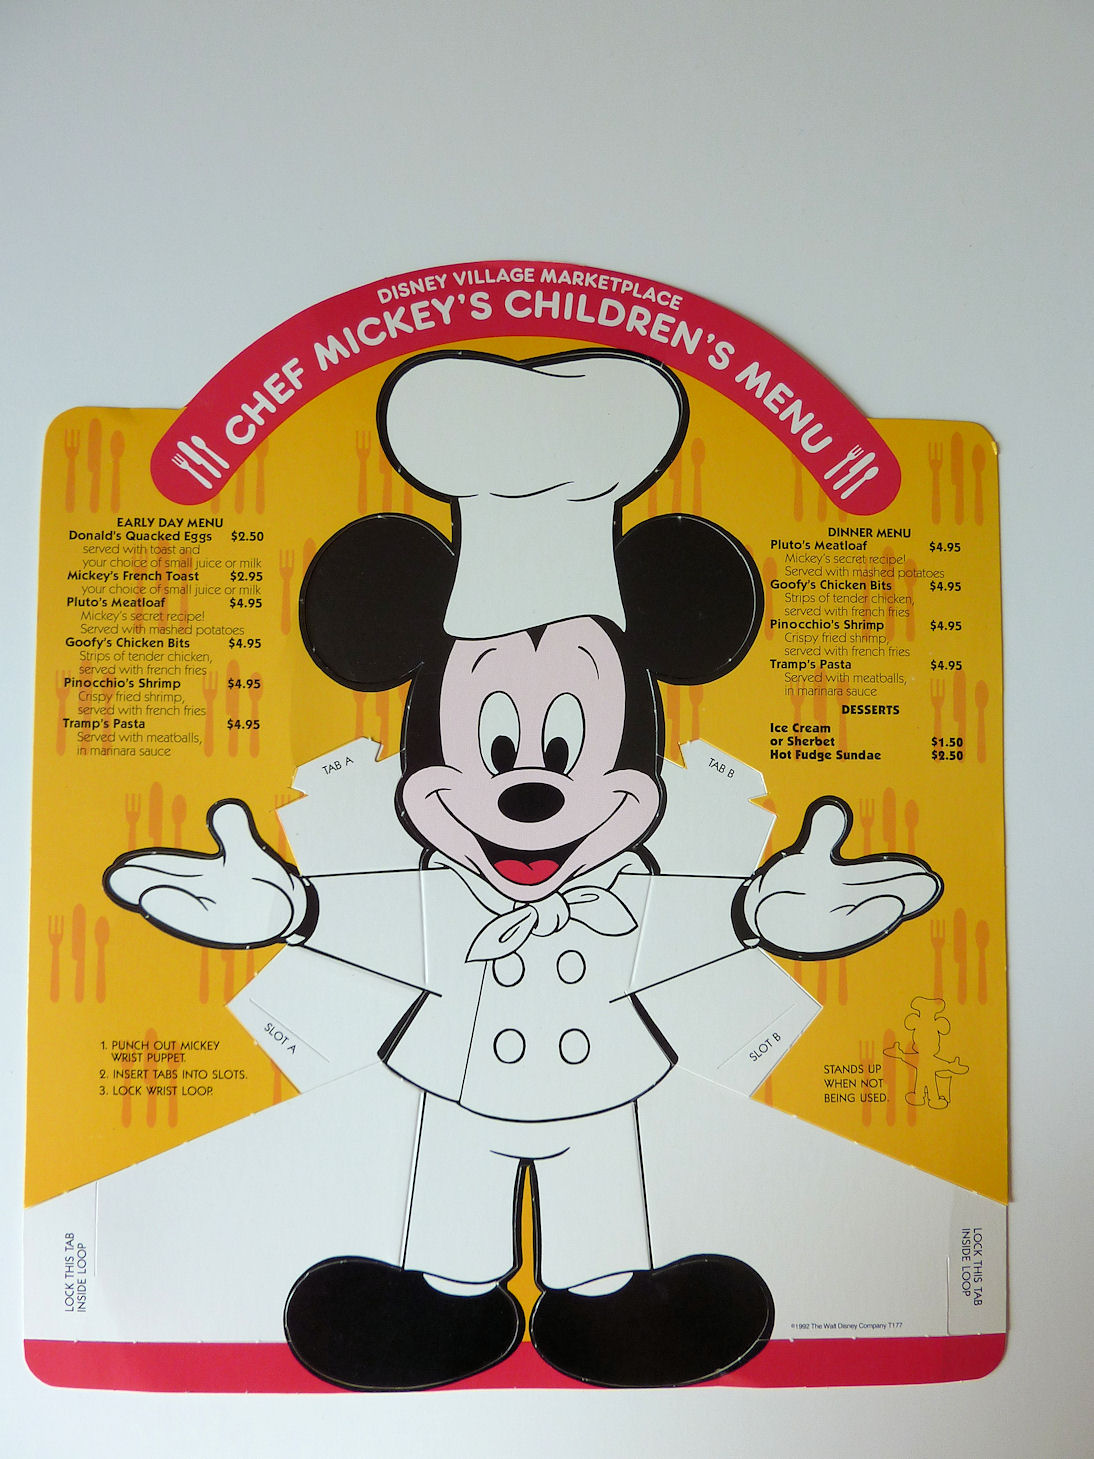 Children's menu from Chef Mickey's